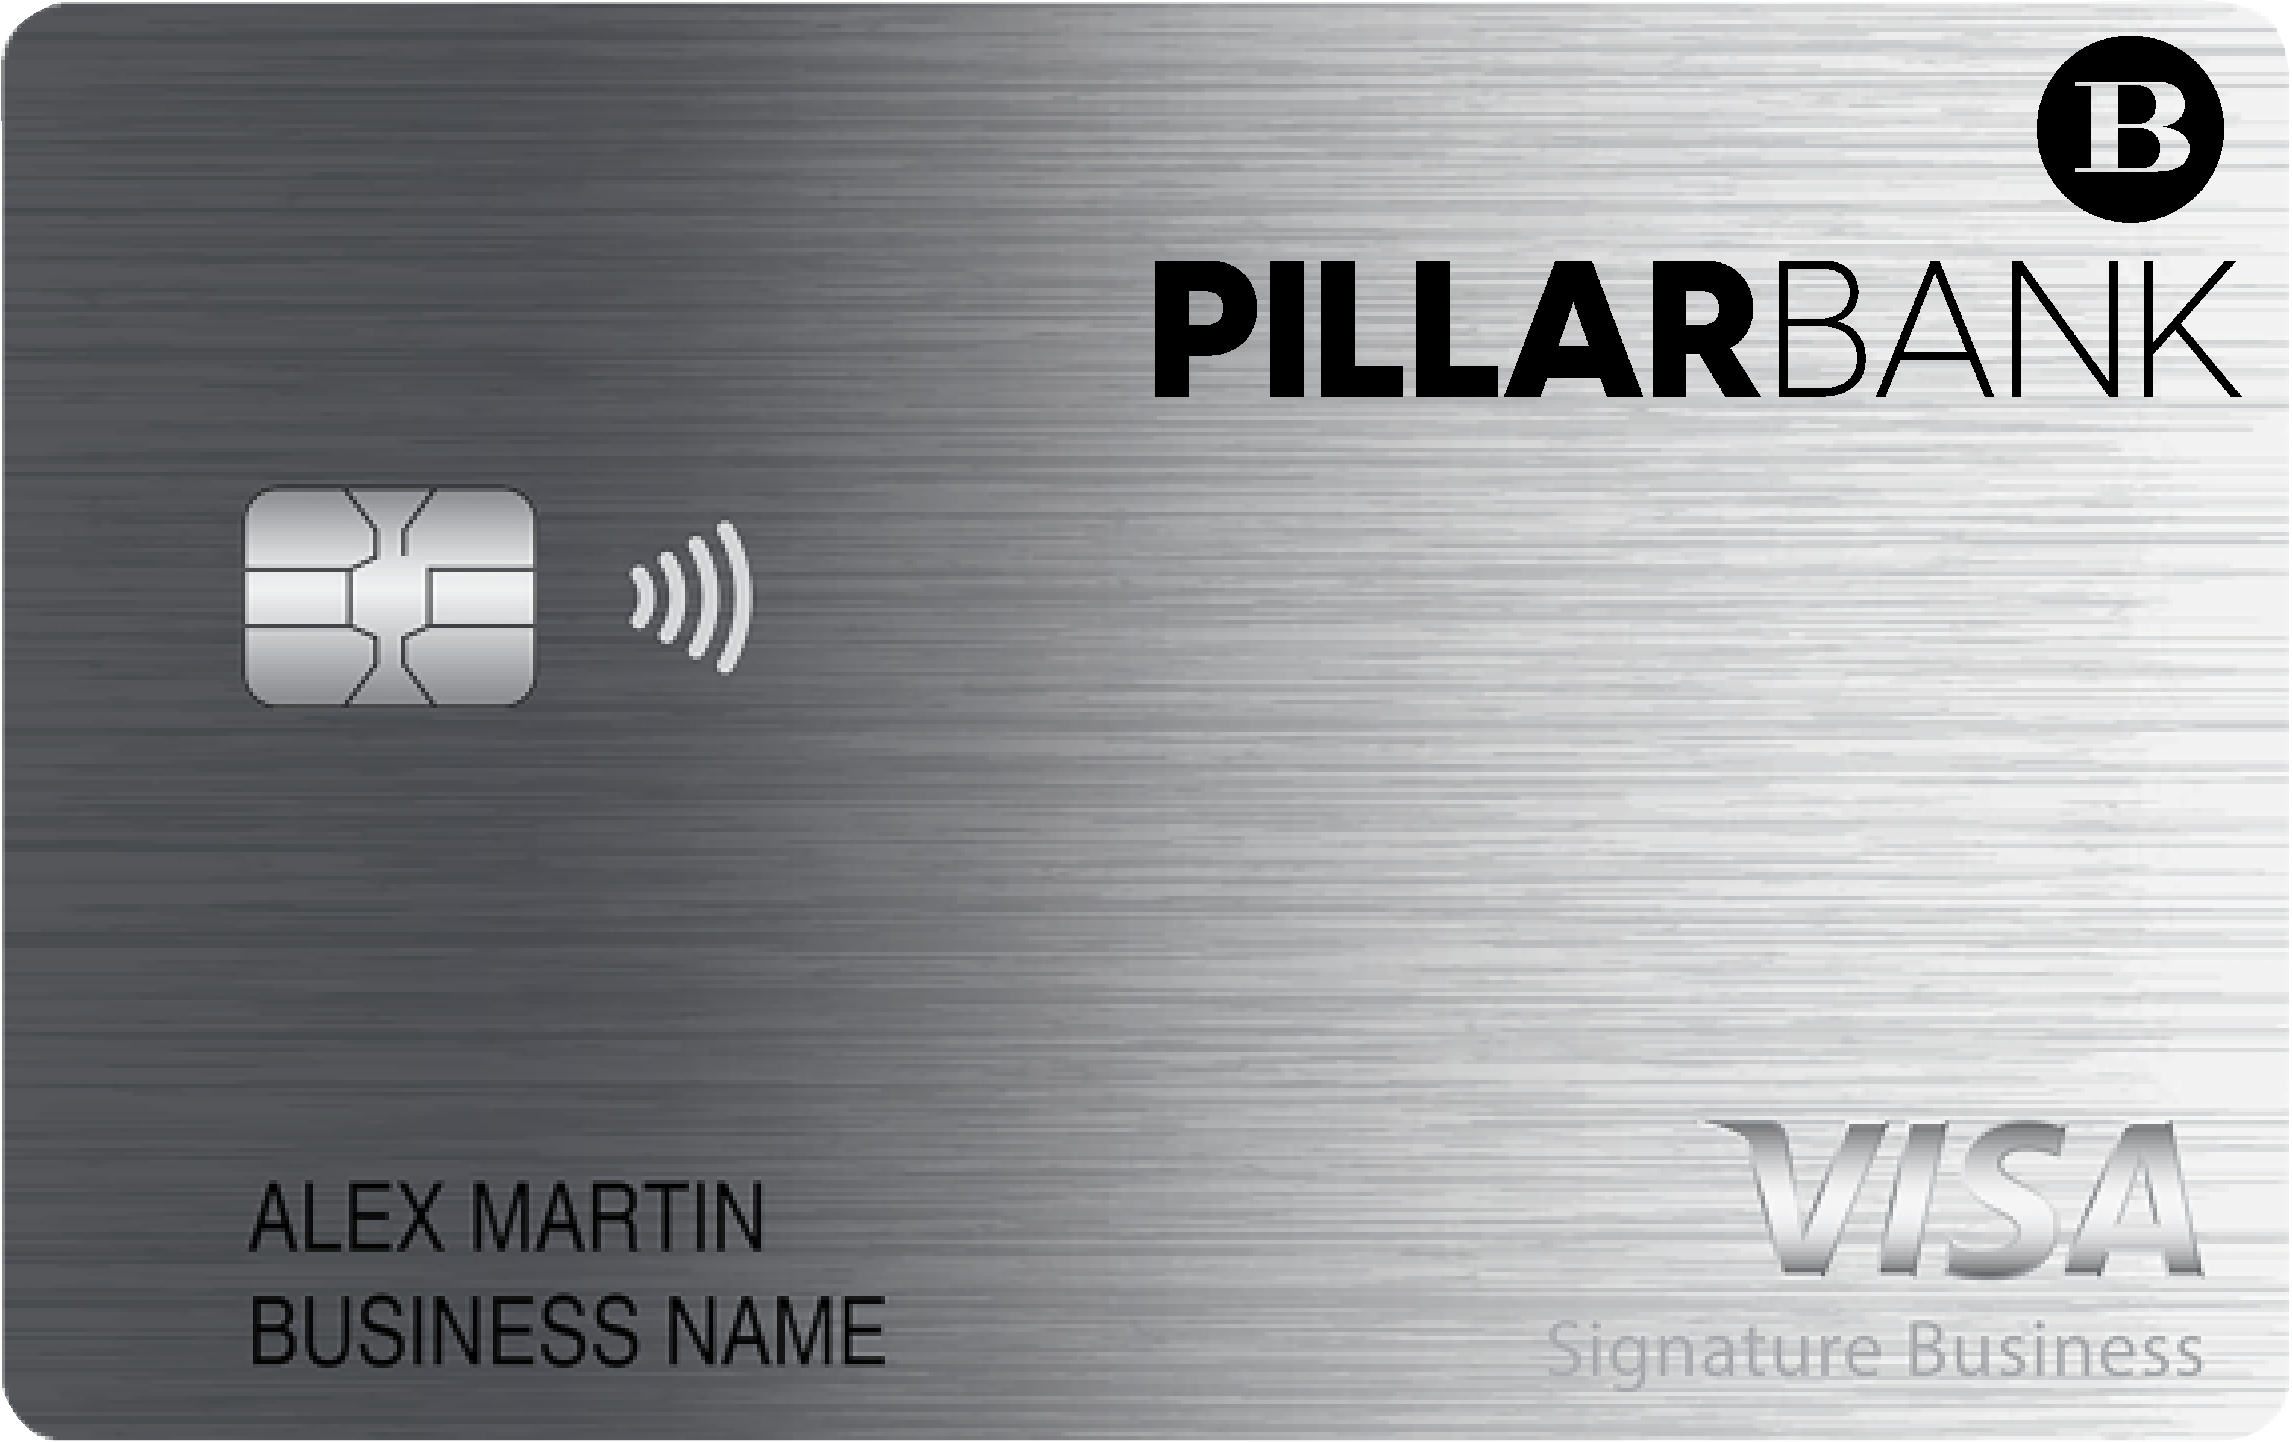 Pillar Bank Smart Business Rewards Card